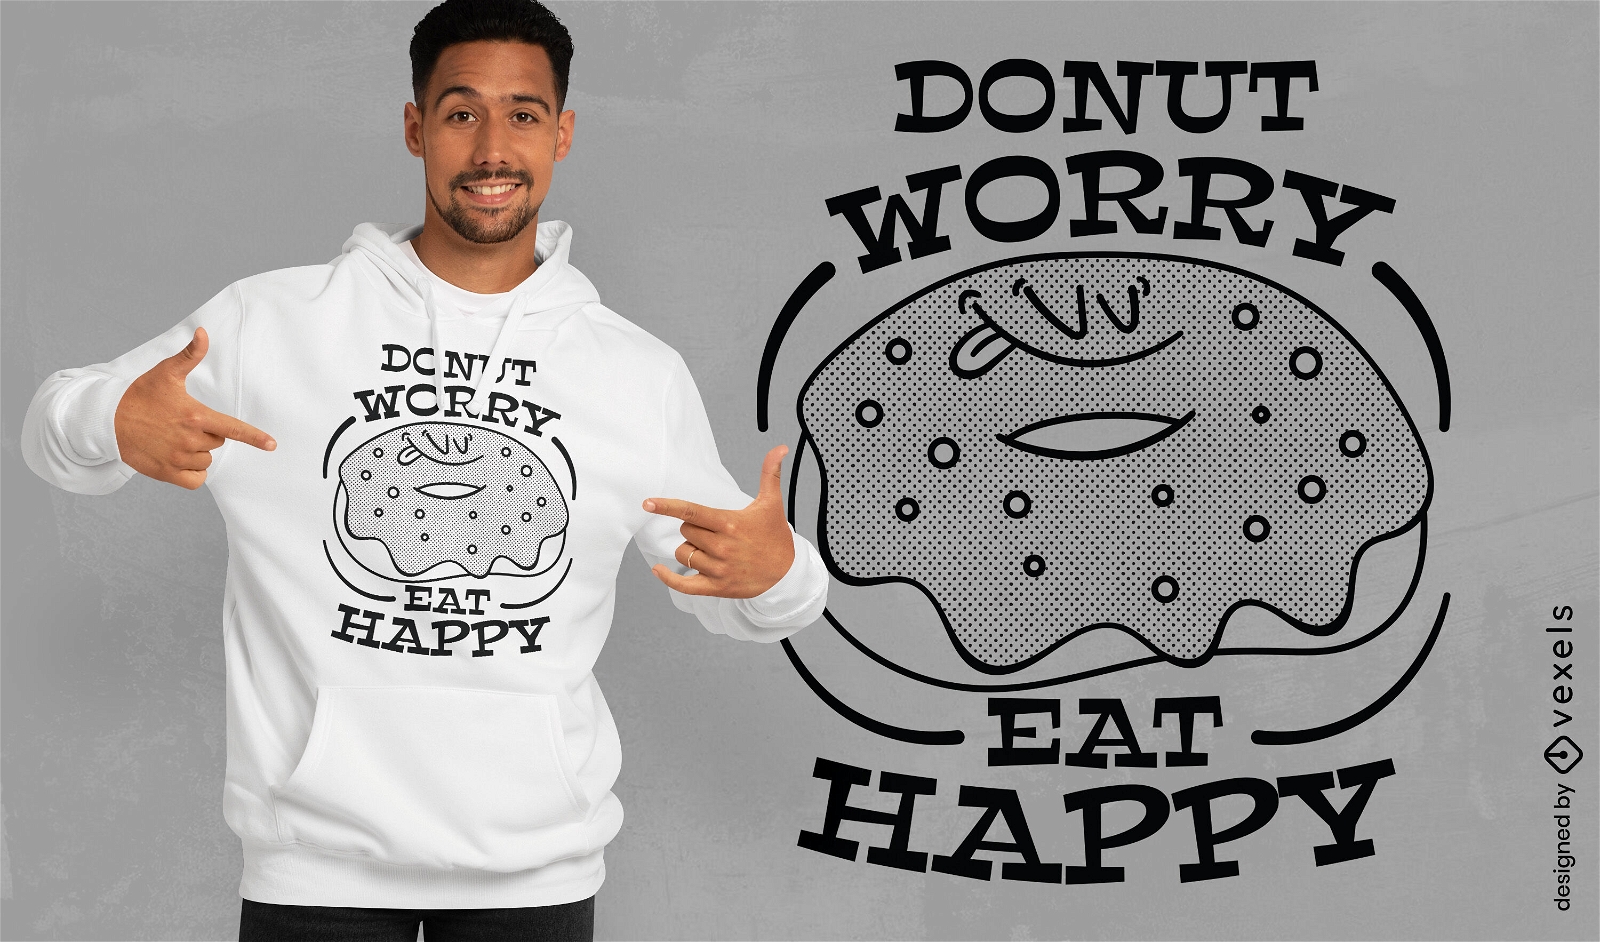 Sweet mantra t-shirt design